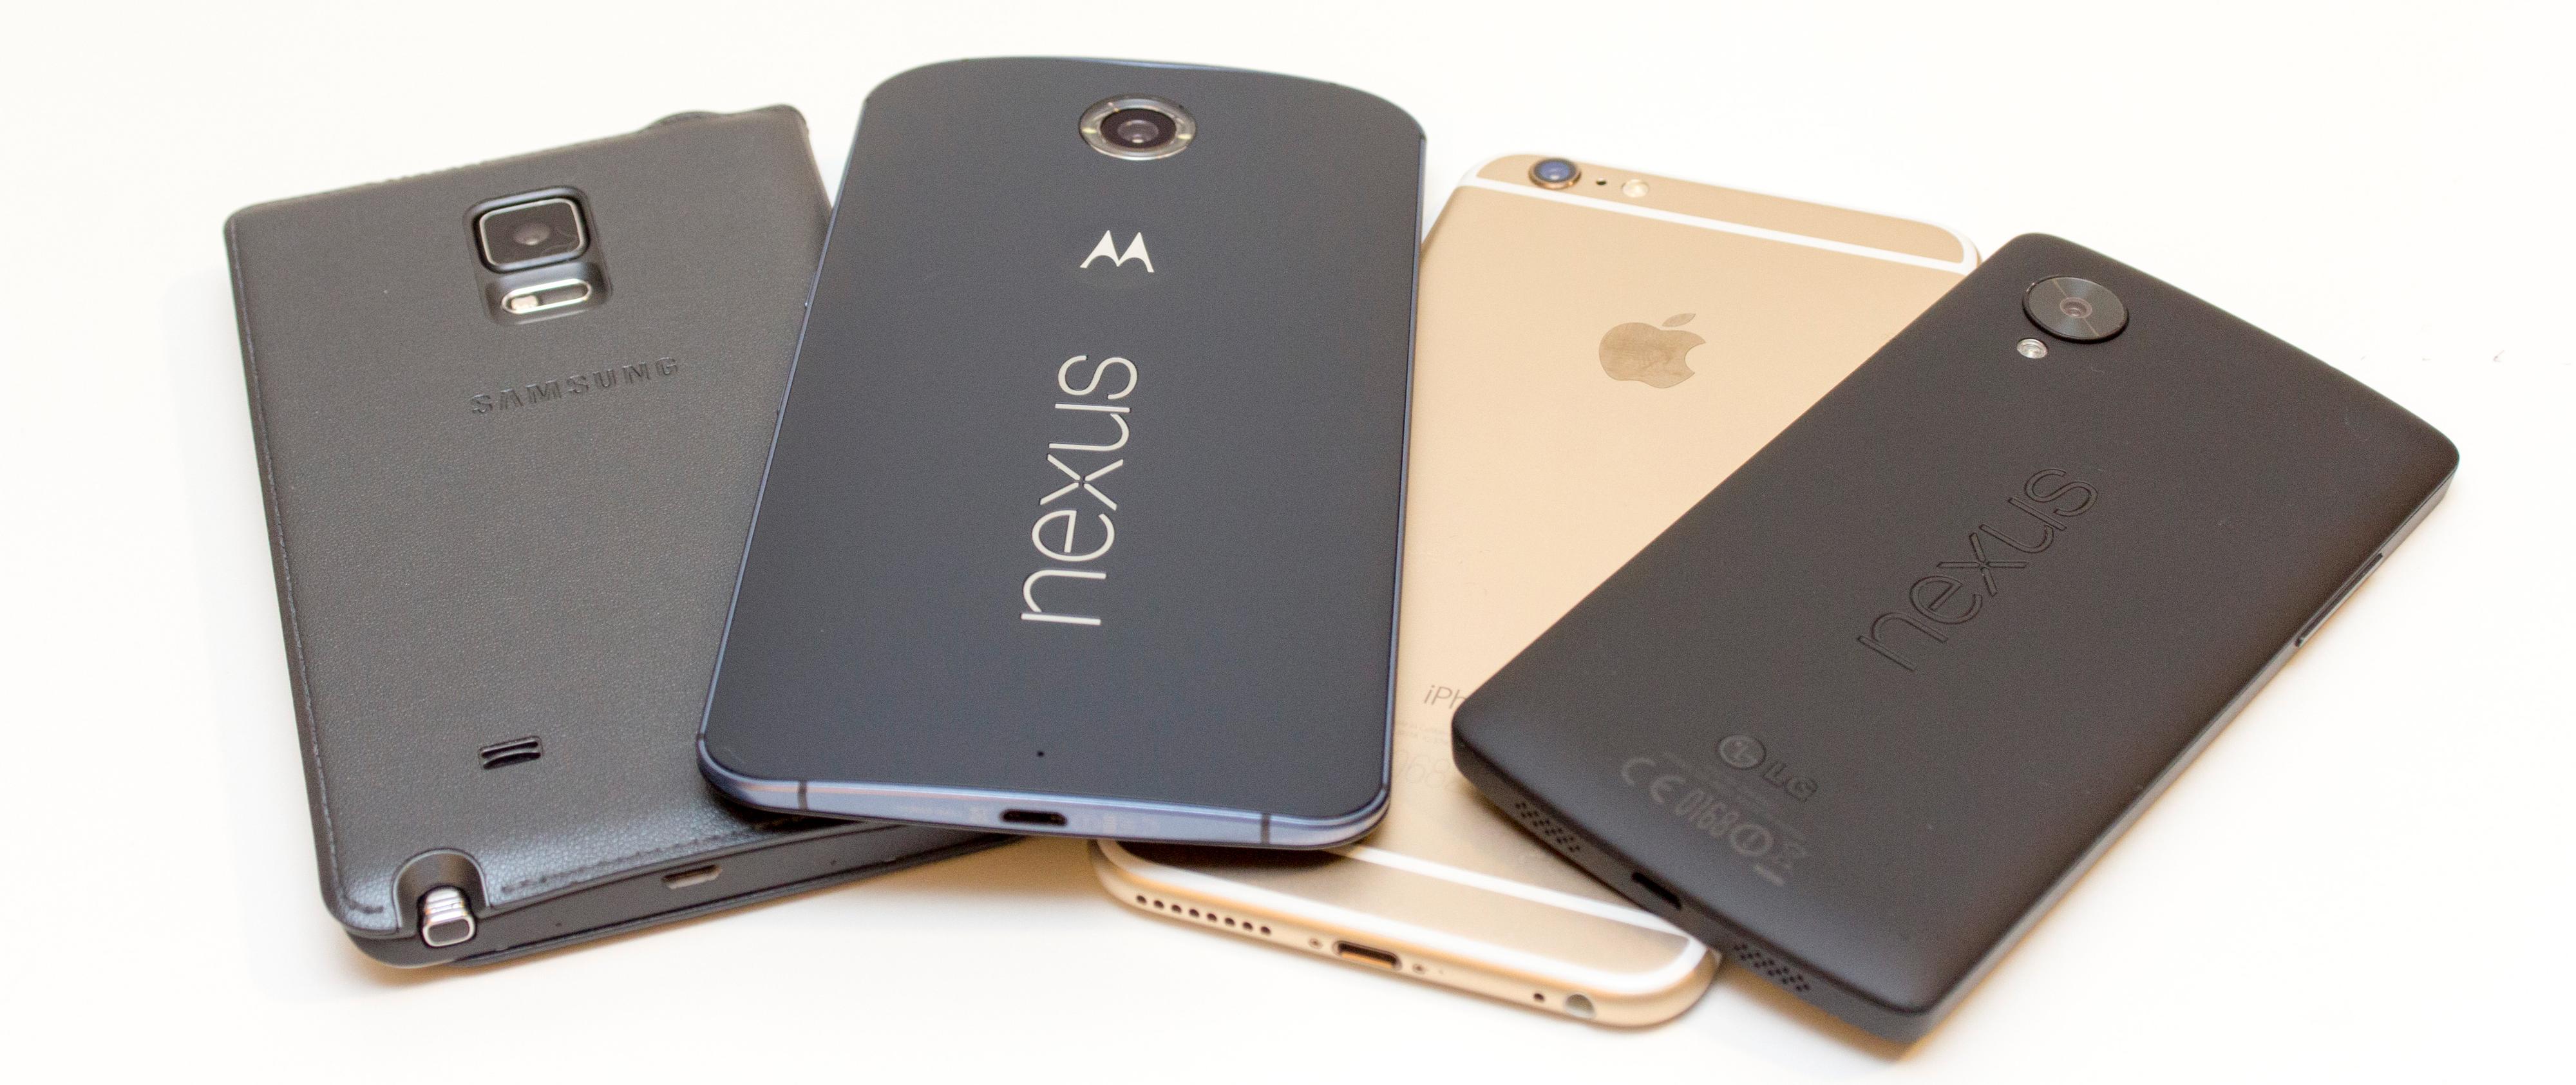 Nye Nexus 6 er ingen småtass. Her sammen med Samsung Galaxy Note Edge, Apple iPhone 6 Plus og LG Nexus 5. Foto: Kurt Lekanger, Tek.no